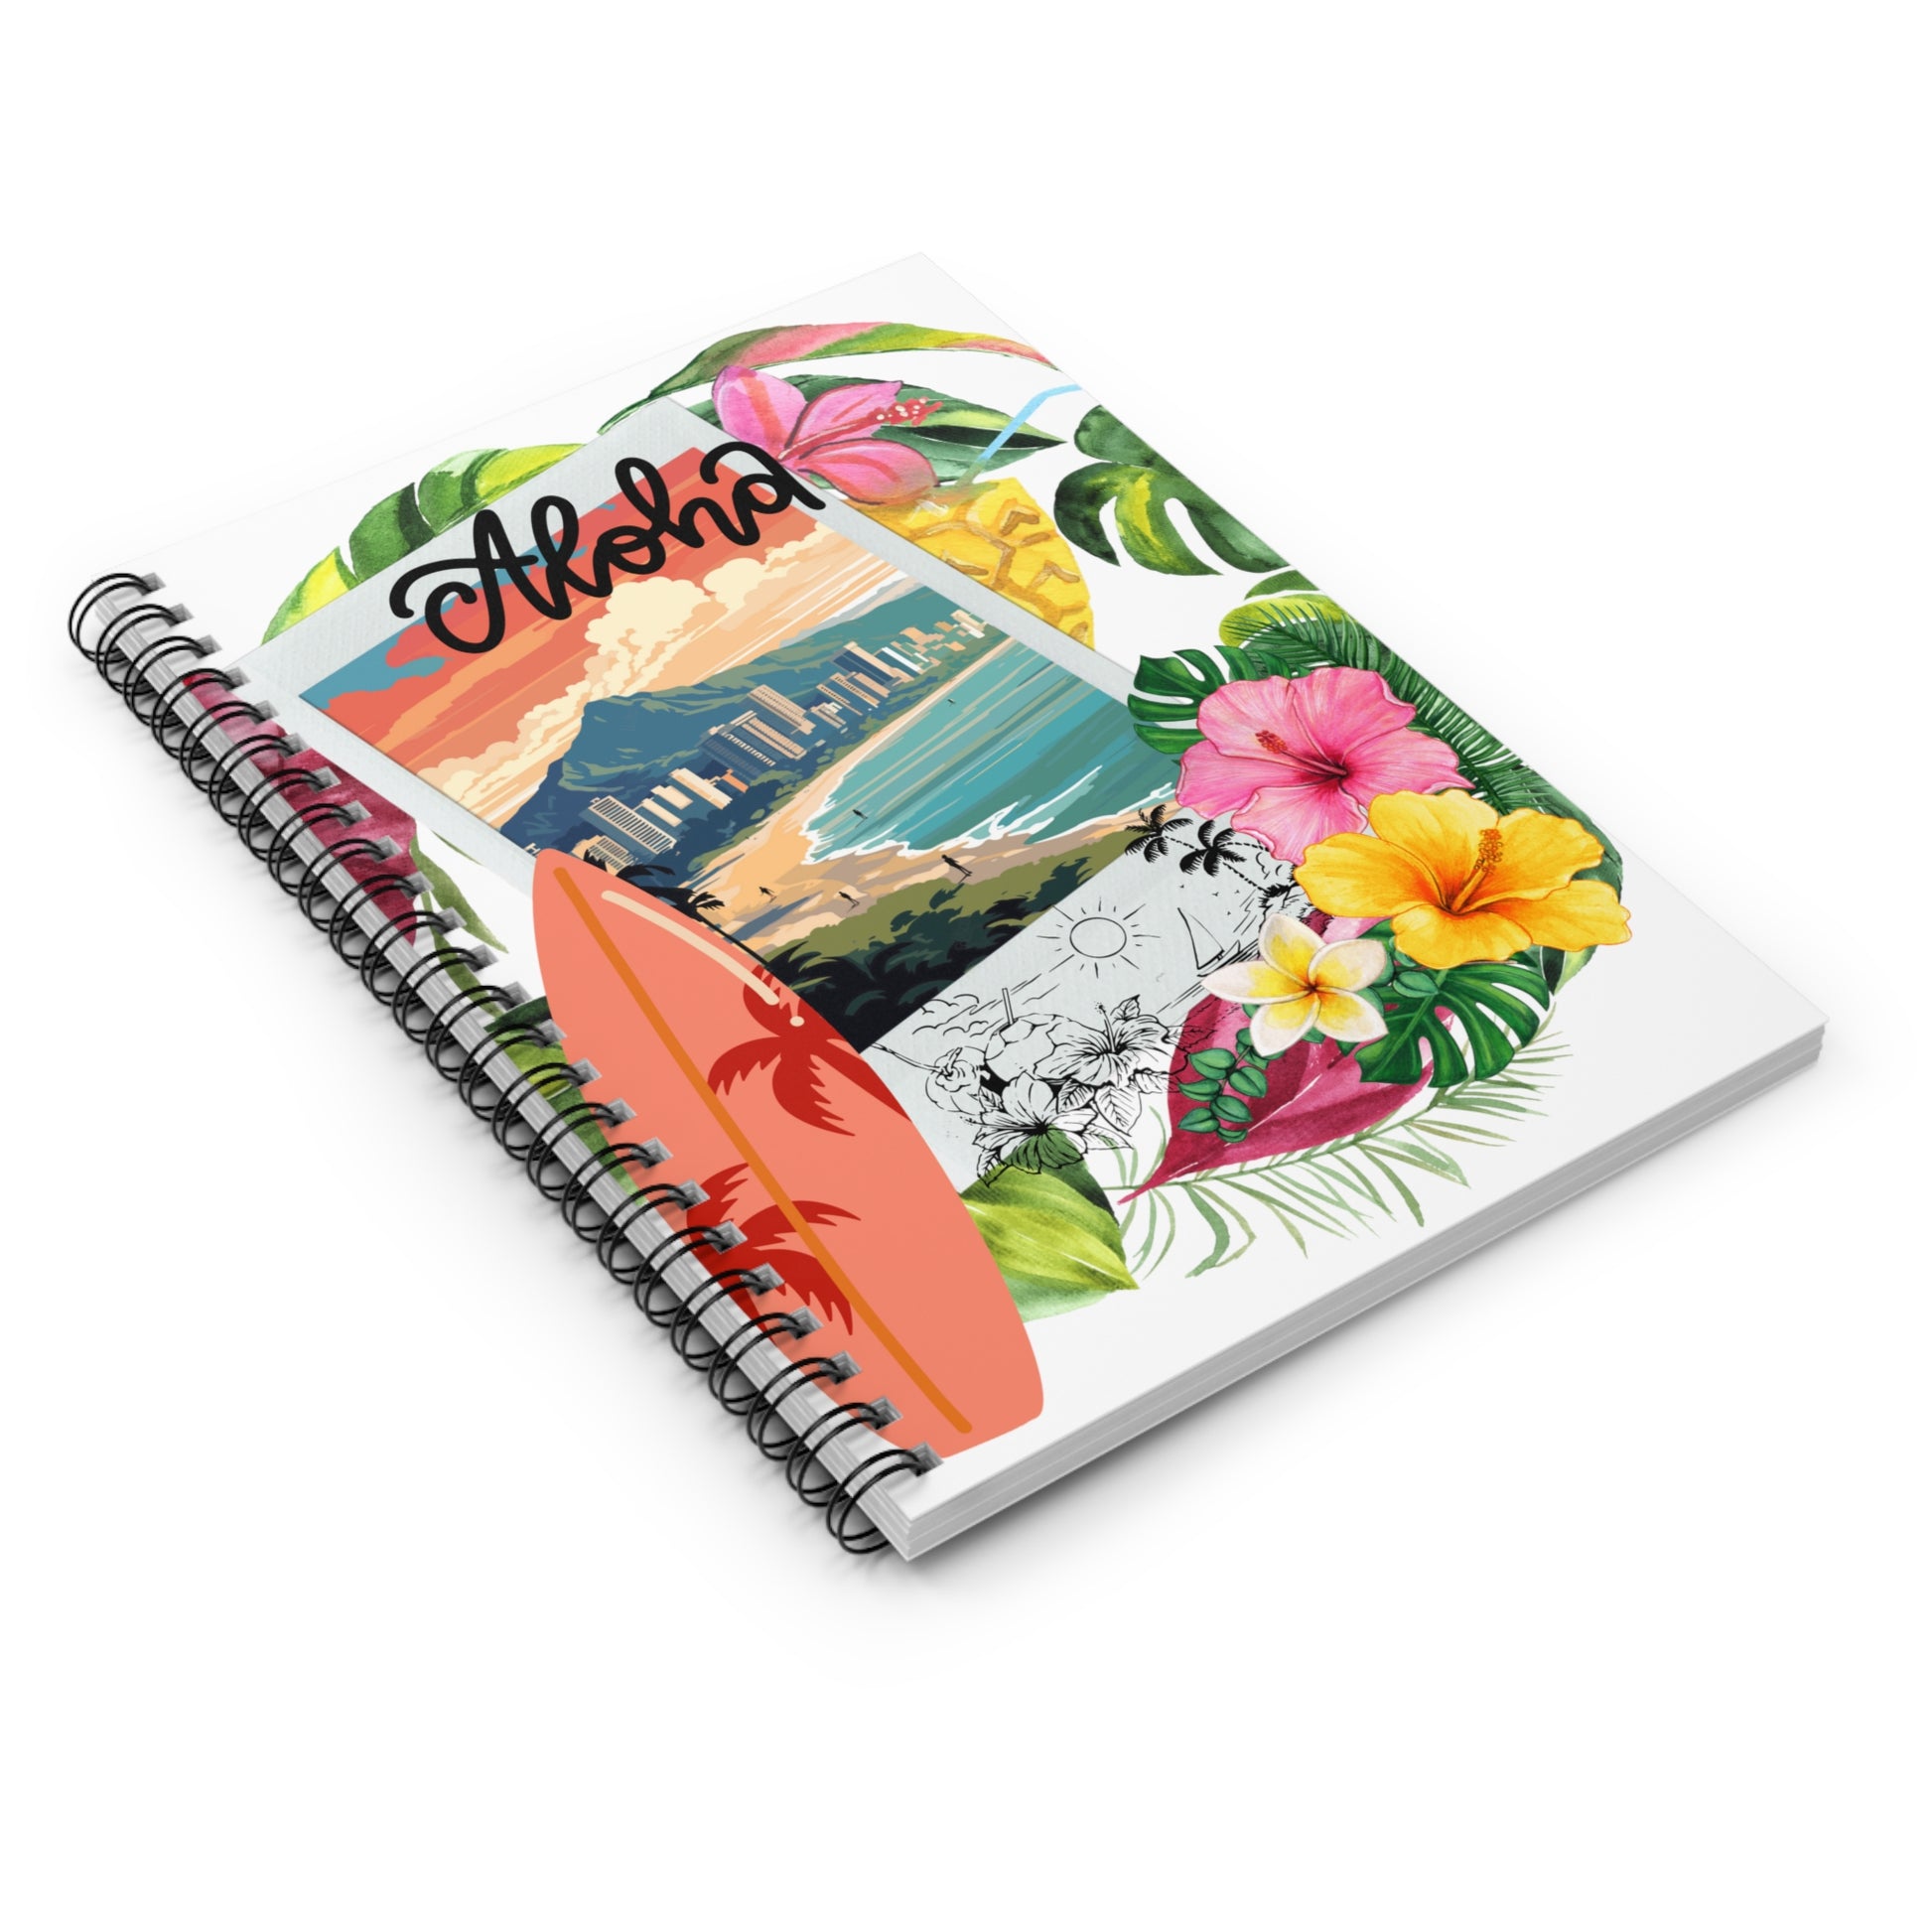 Waikiki Hawaii: Spiral Notebook - Log Books - Journals - Diaries - and More Custom Printed by TheGlassyLass.com